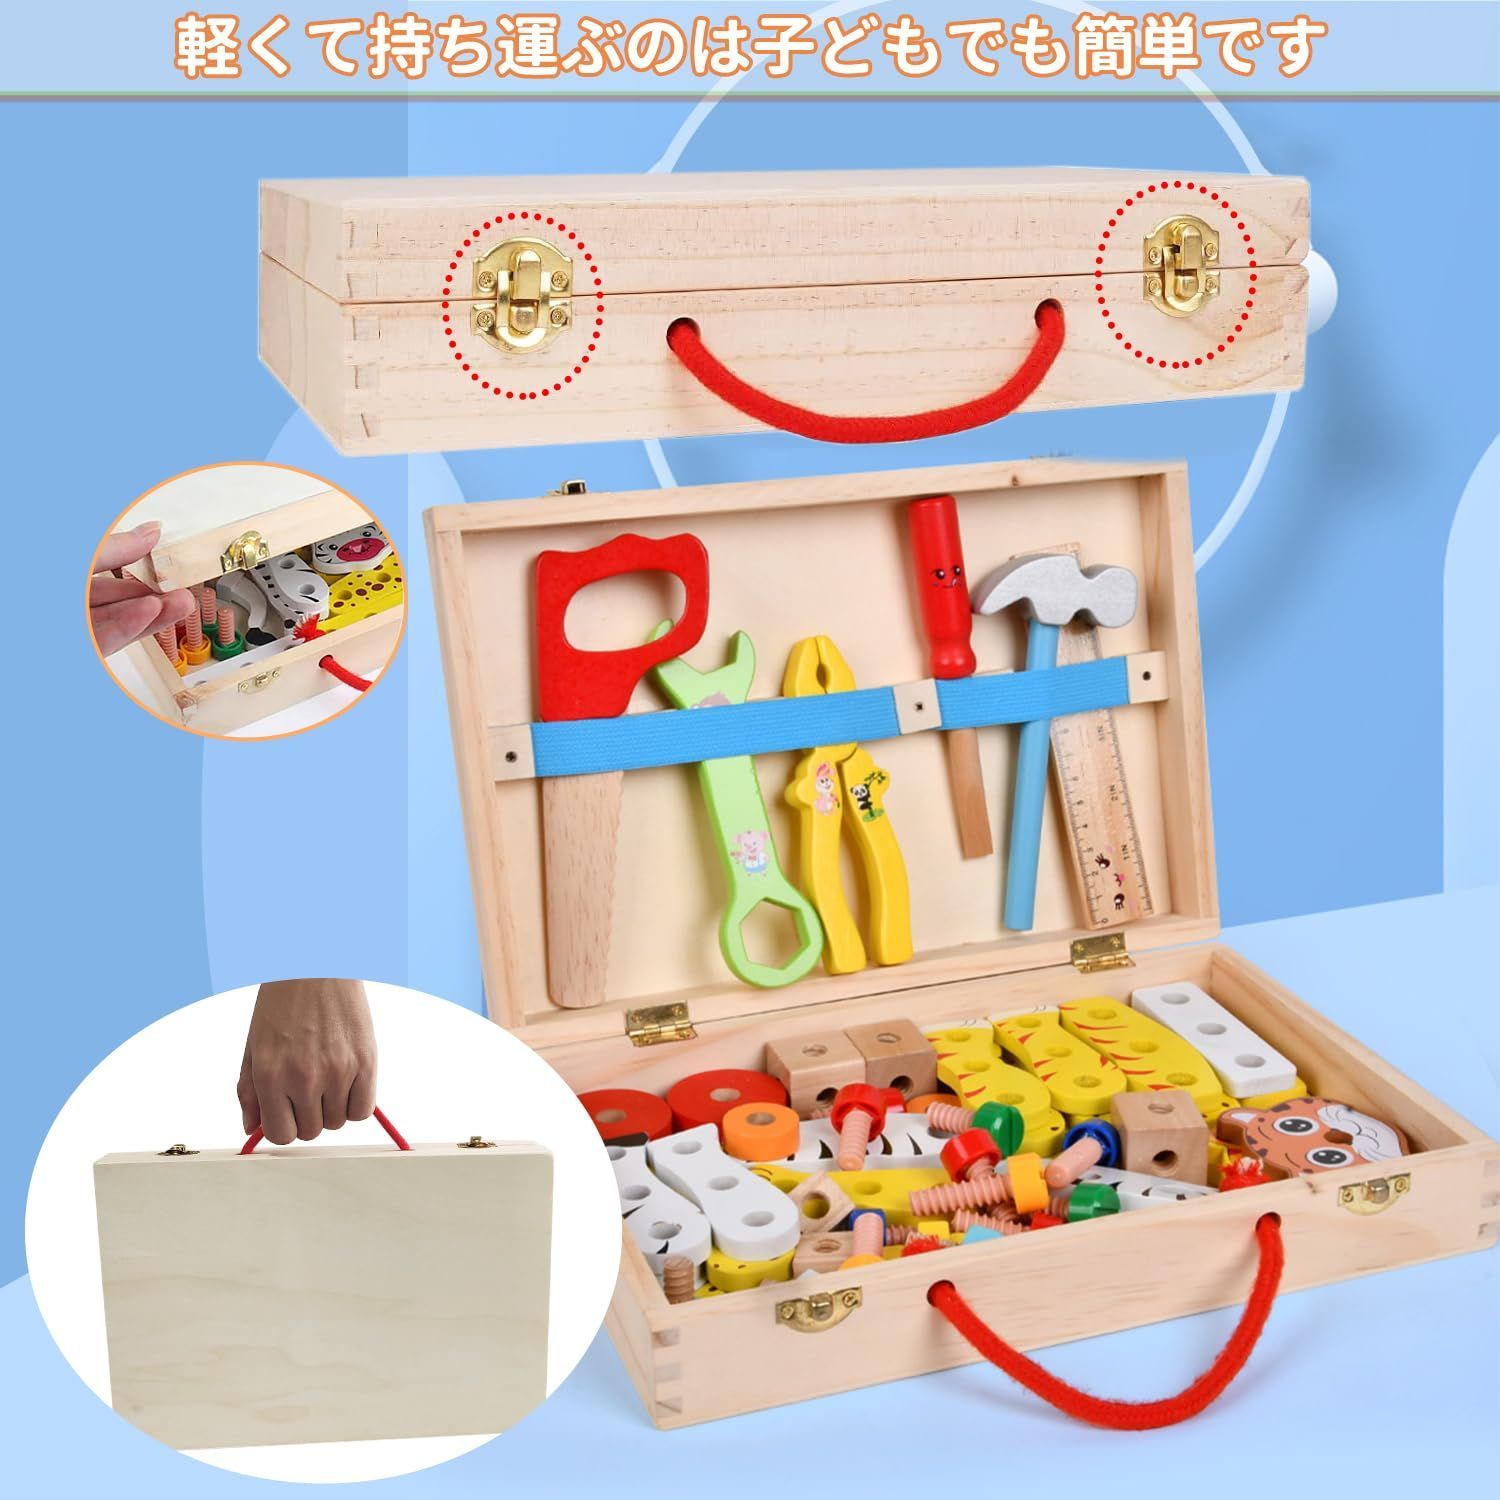 Jecimco 大工さん おもちゃ 木製 2in1 子供 知育玩具 DIY 組み